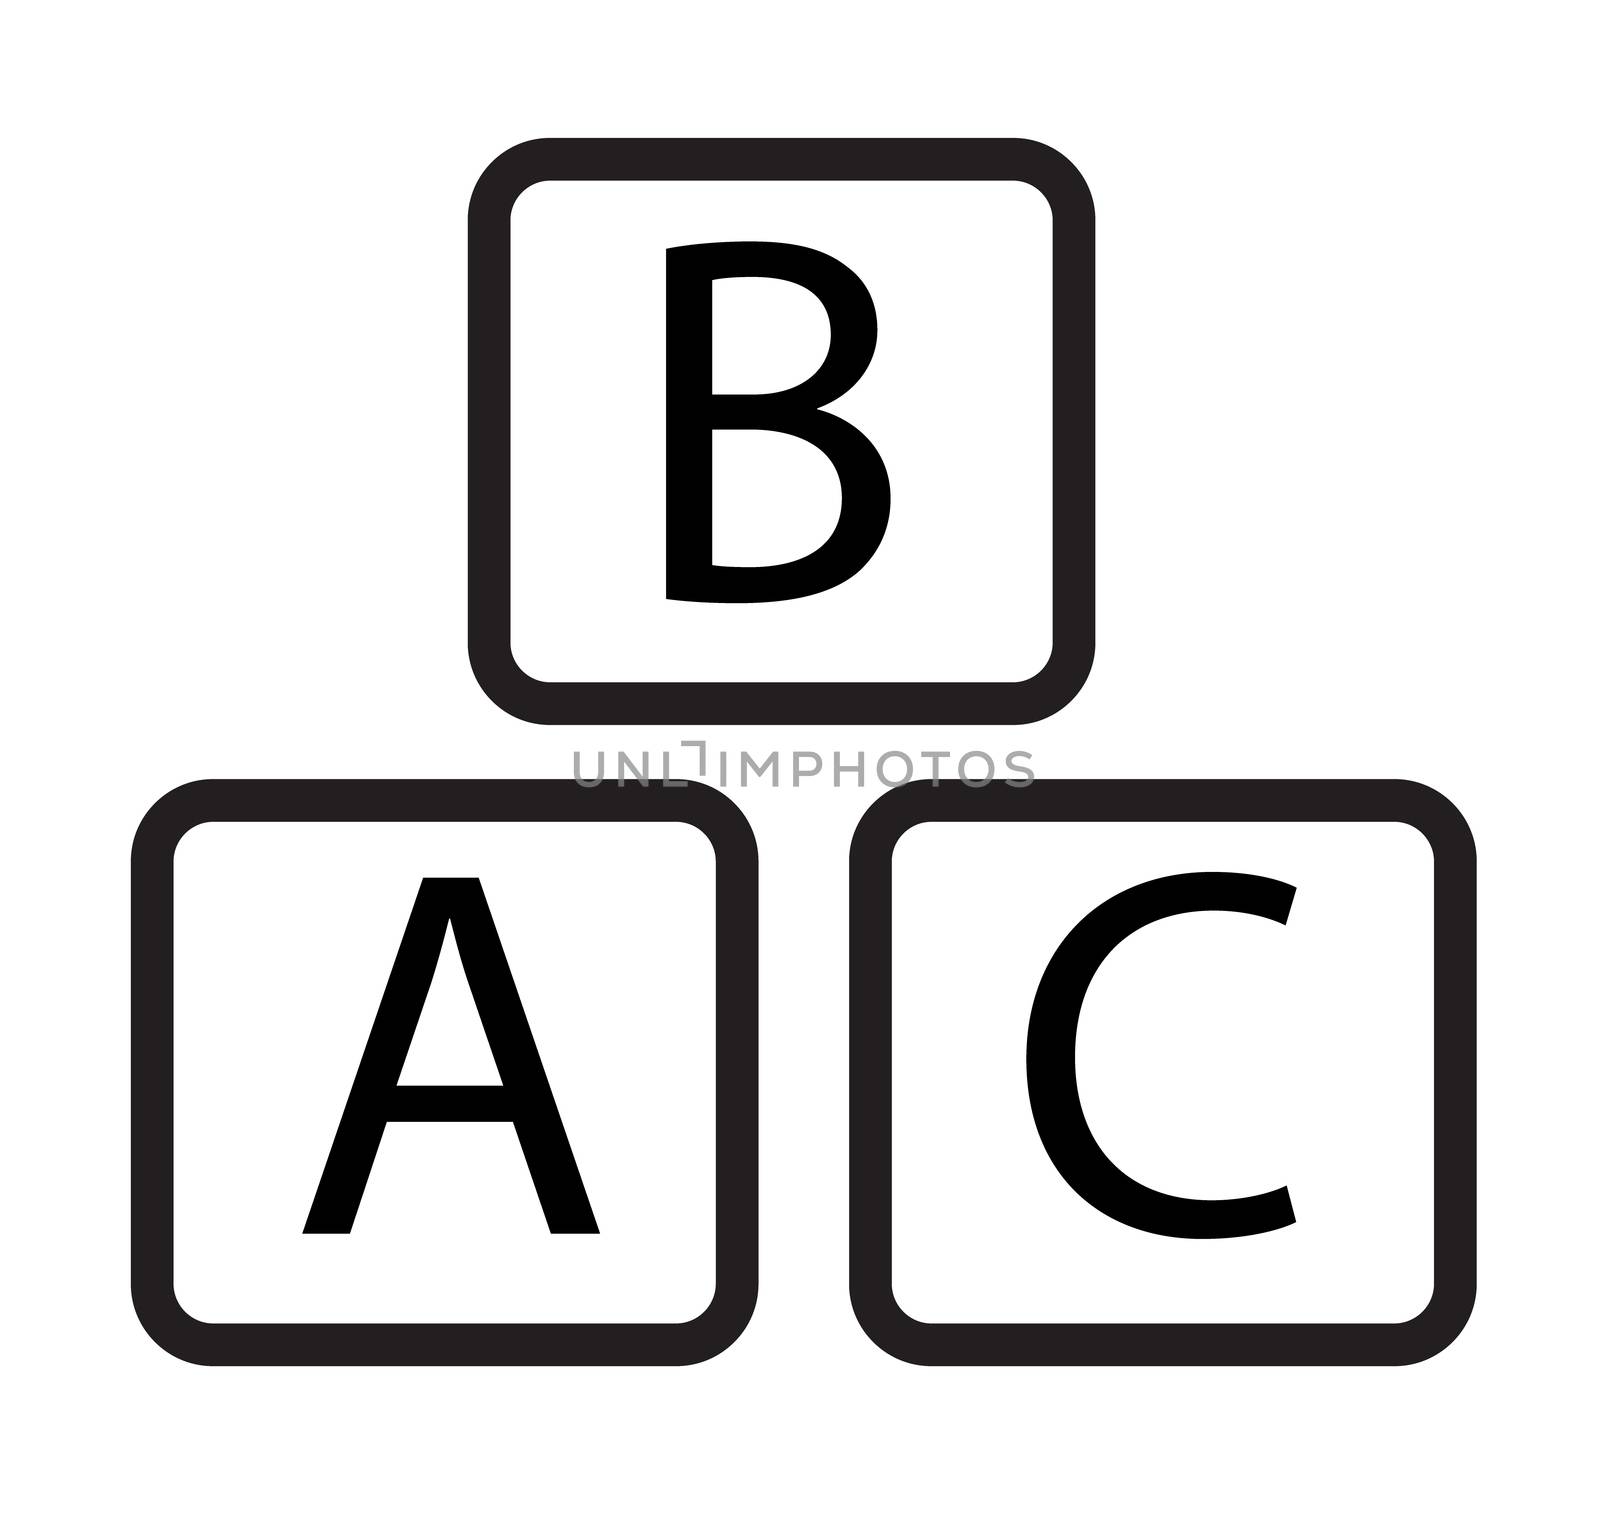 abc block icon on white background. abc block sign.